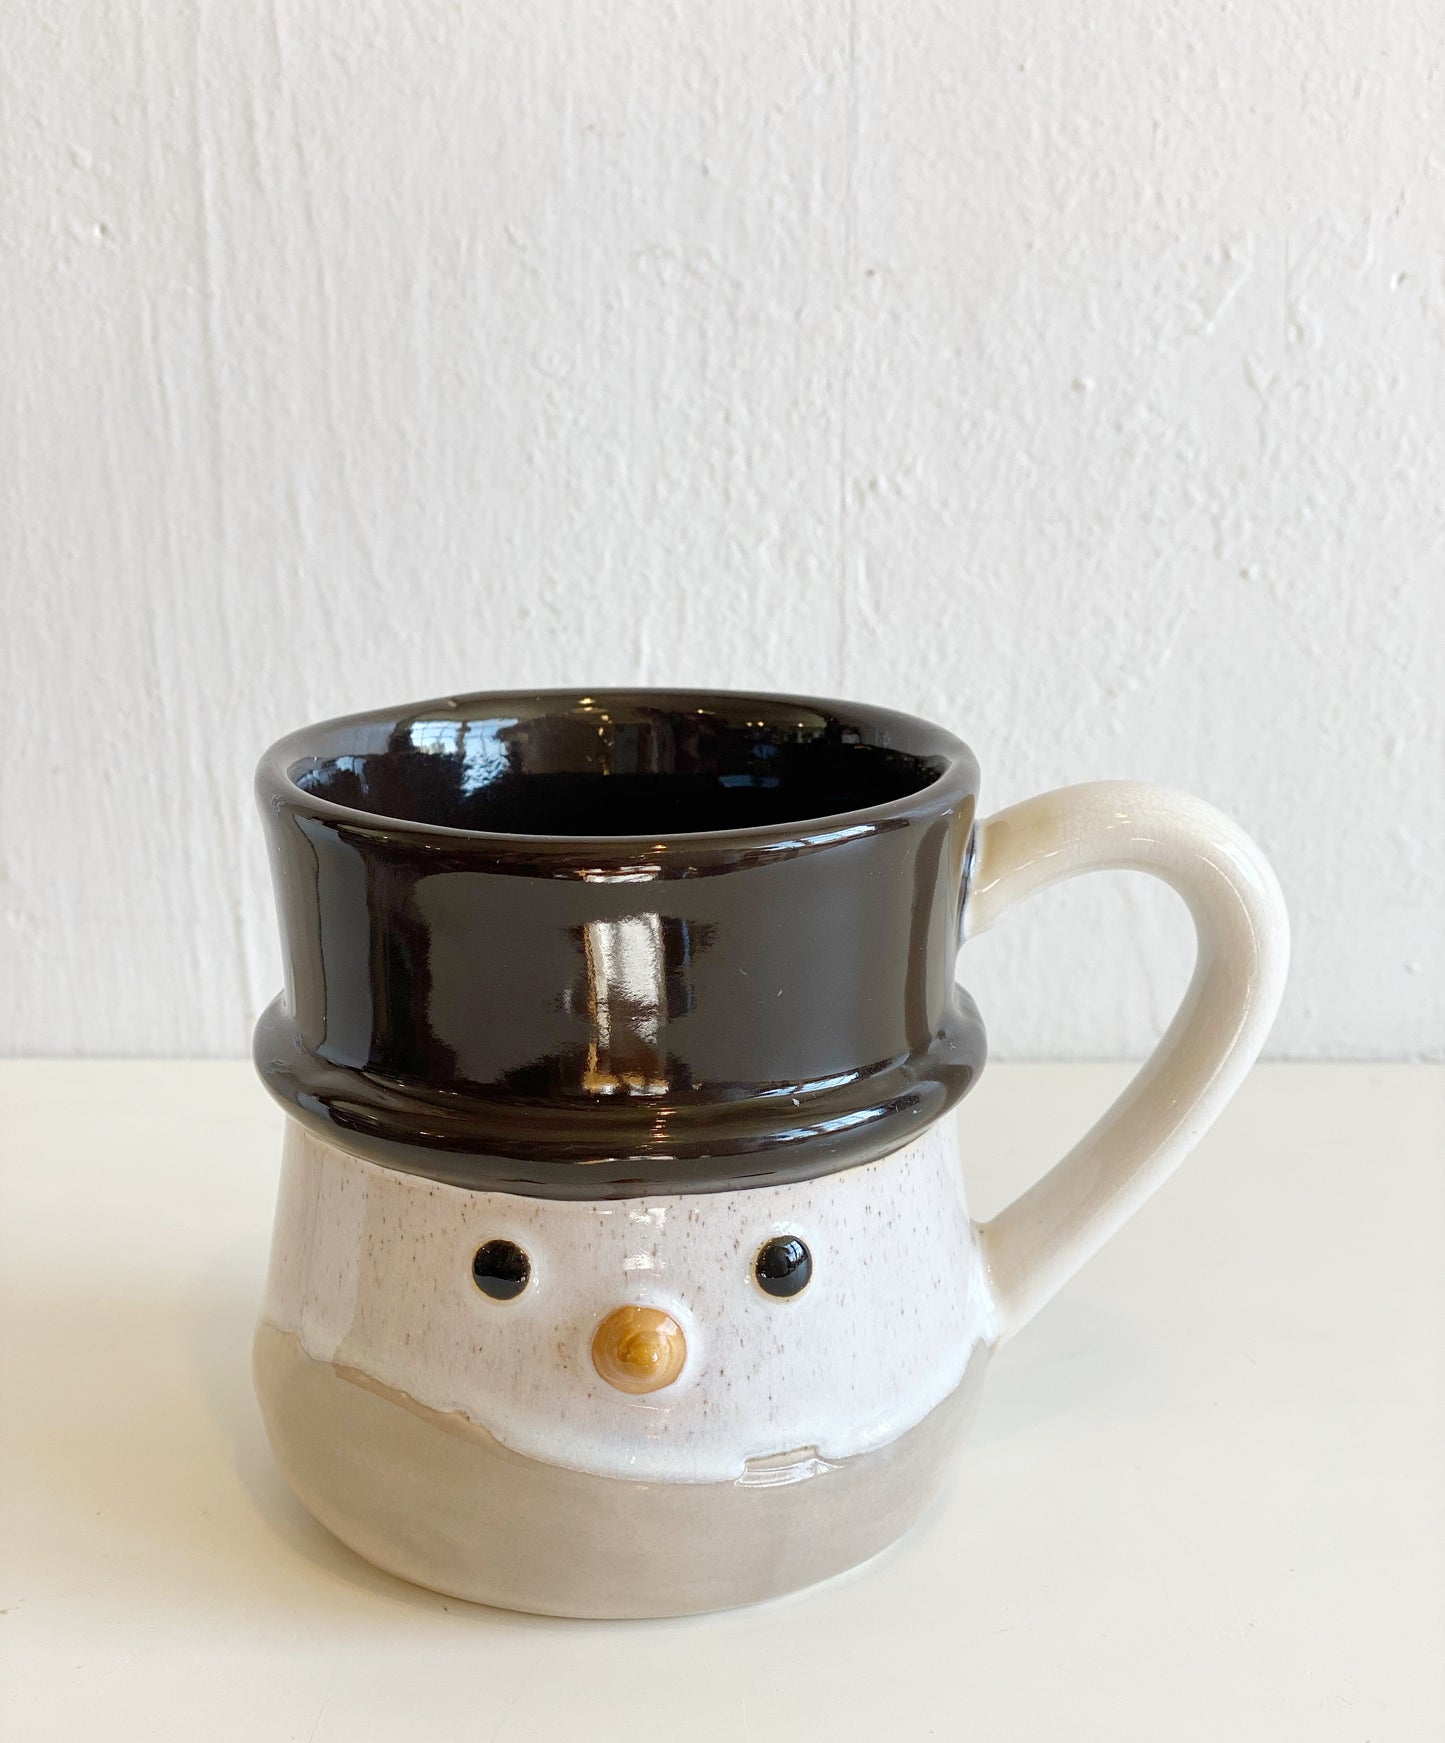 Snow day snowman mug